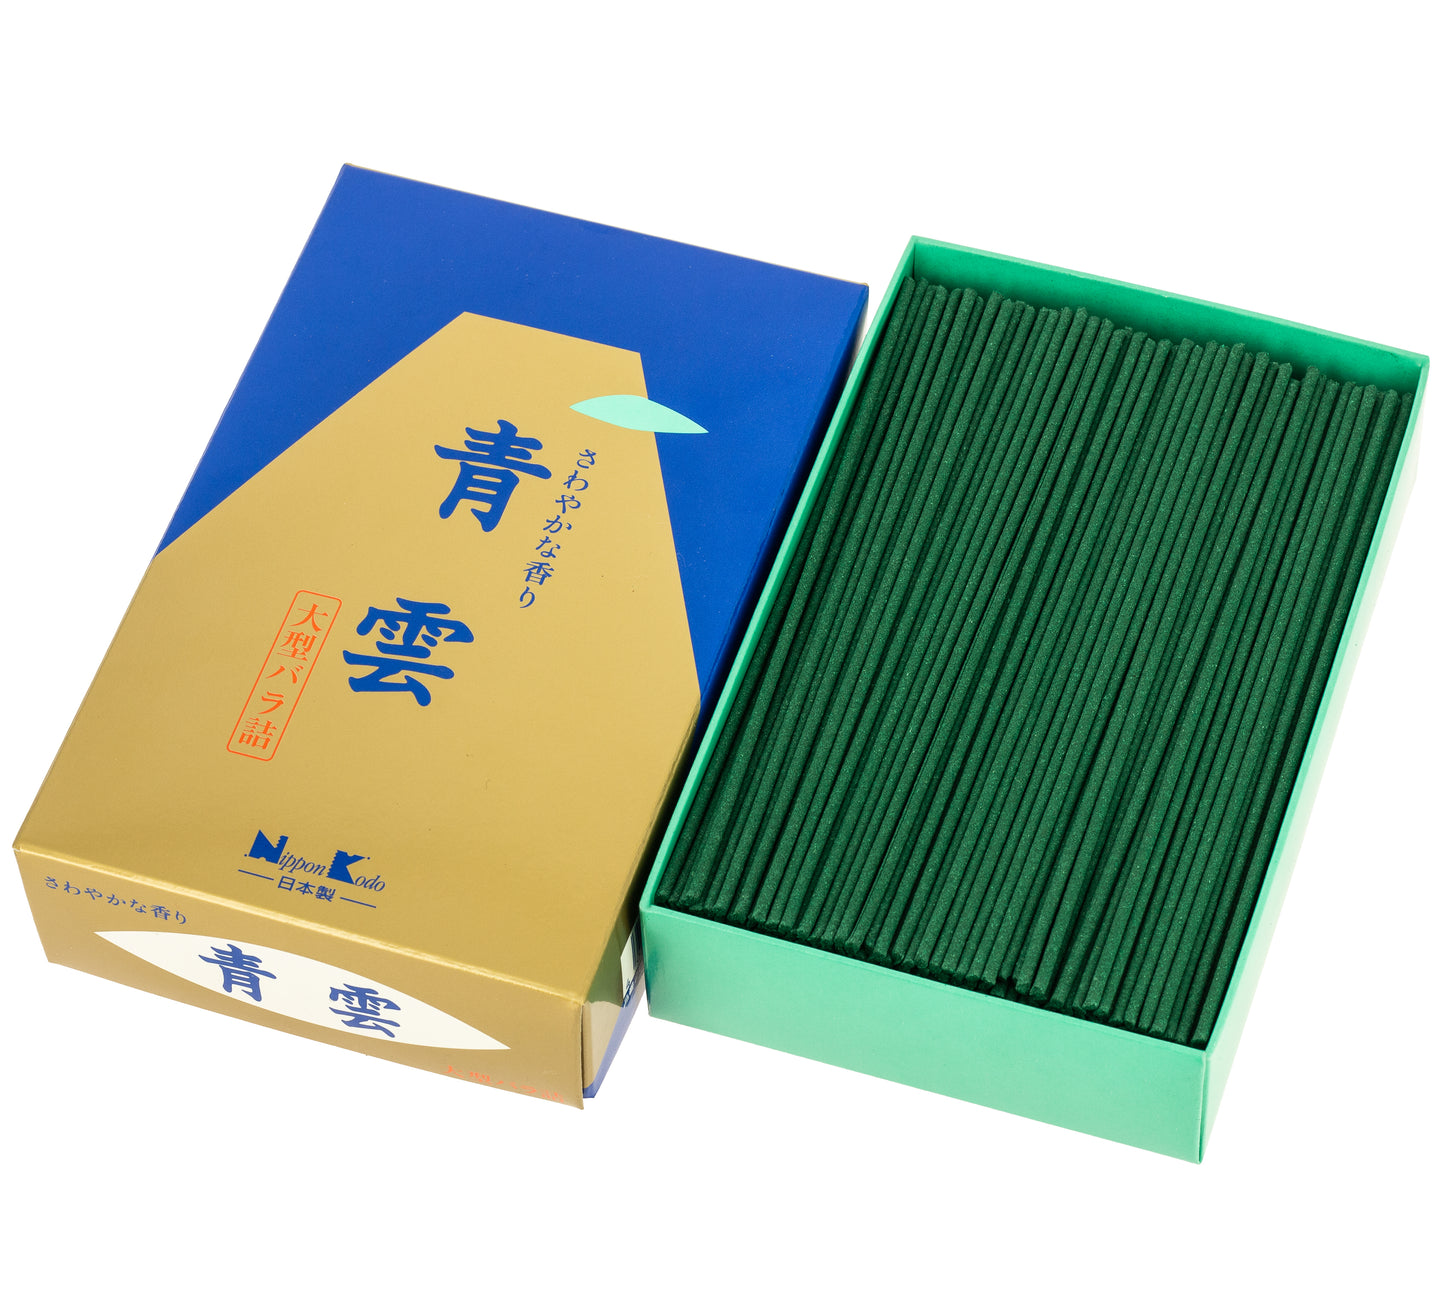 Seiun Classic Incense - Large Box